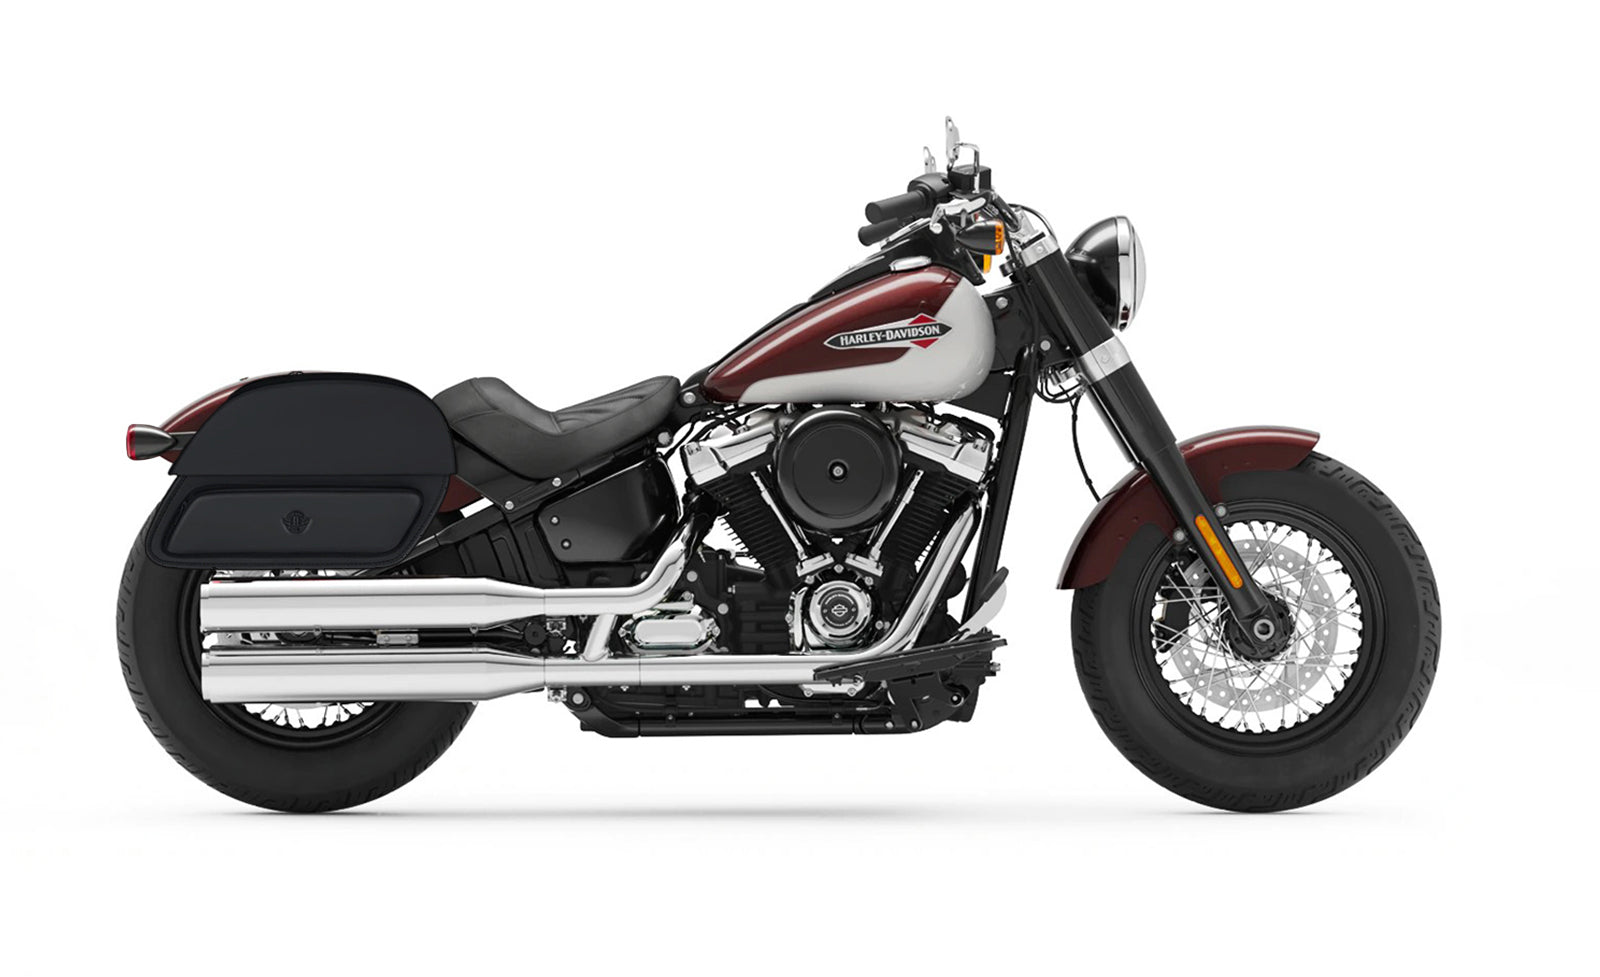 33L - Pantheon Large Saddlebags for Harley Softail Slim FLSL on Bike Photo @expand